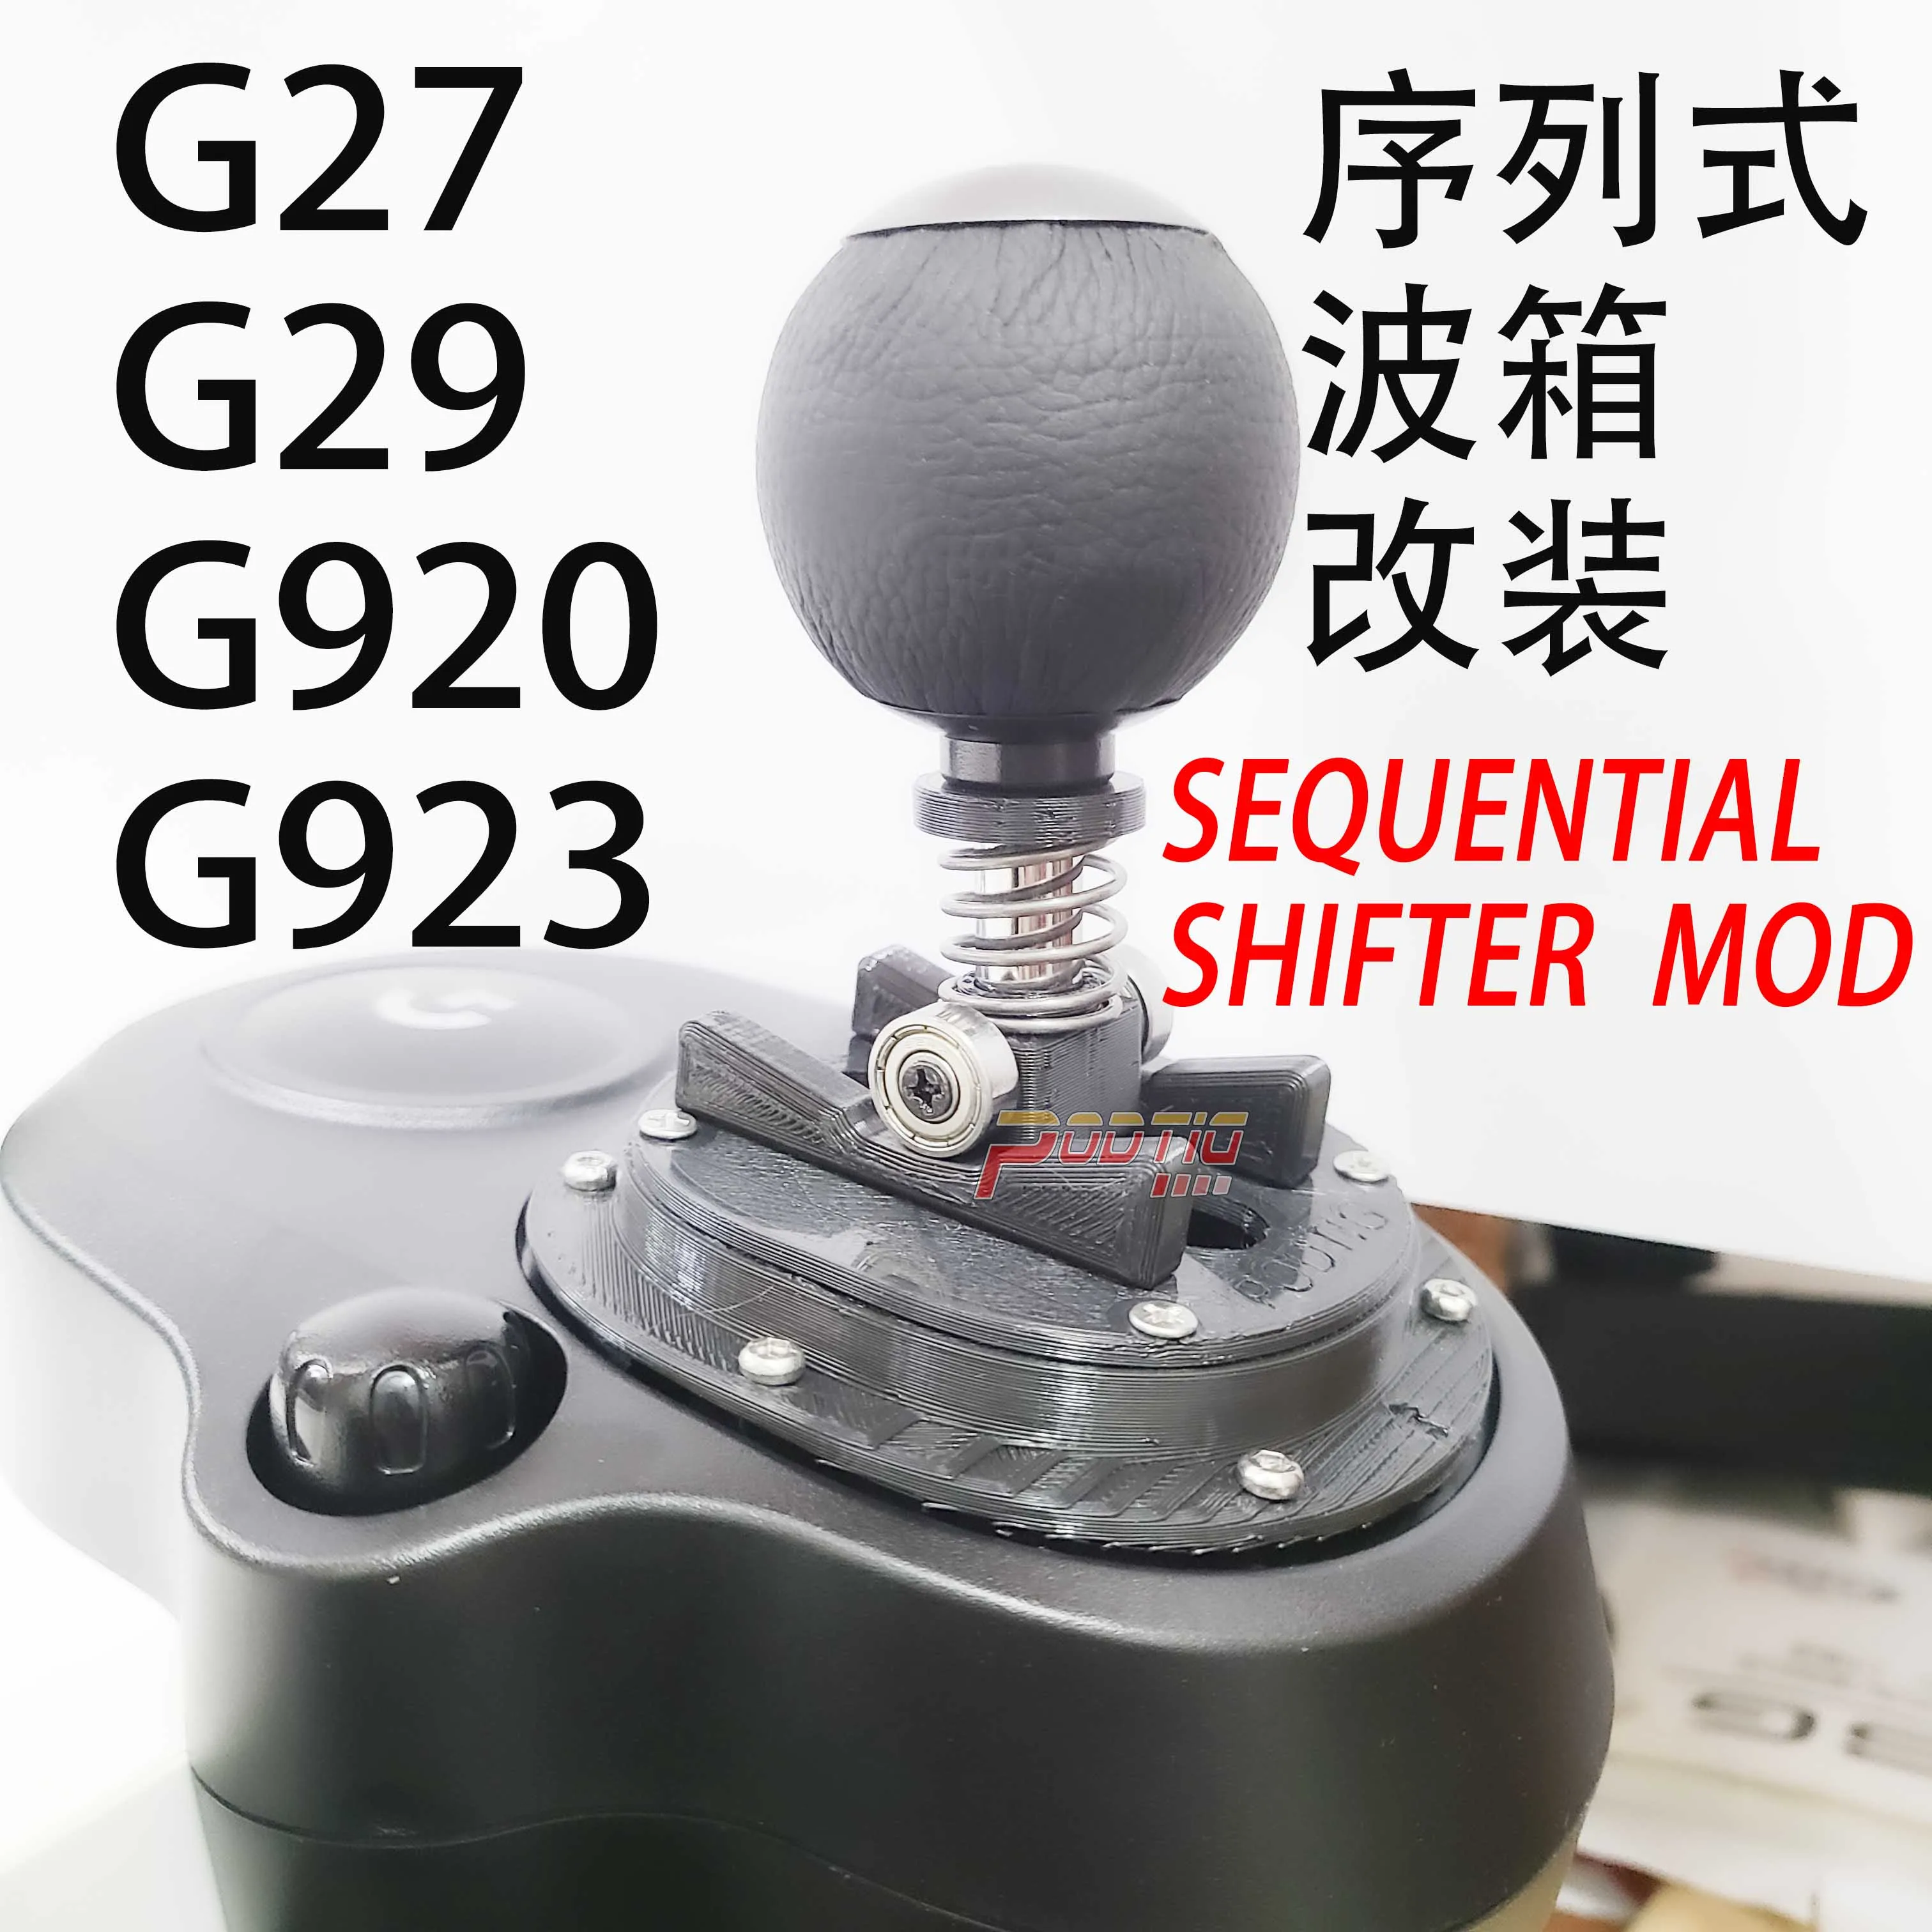 【PODTIG】For logitech G923 logitech G29 G27 SEQUENTIAL SHIFTER MOD SIMRACING sim racing